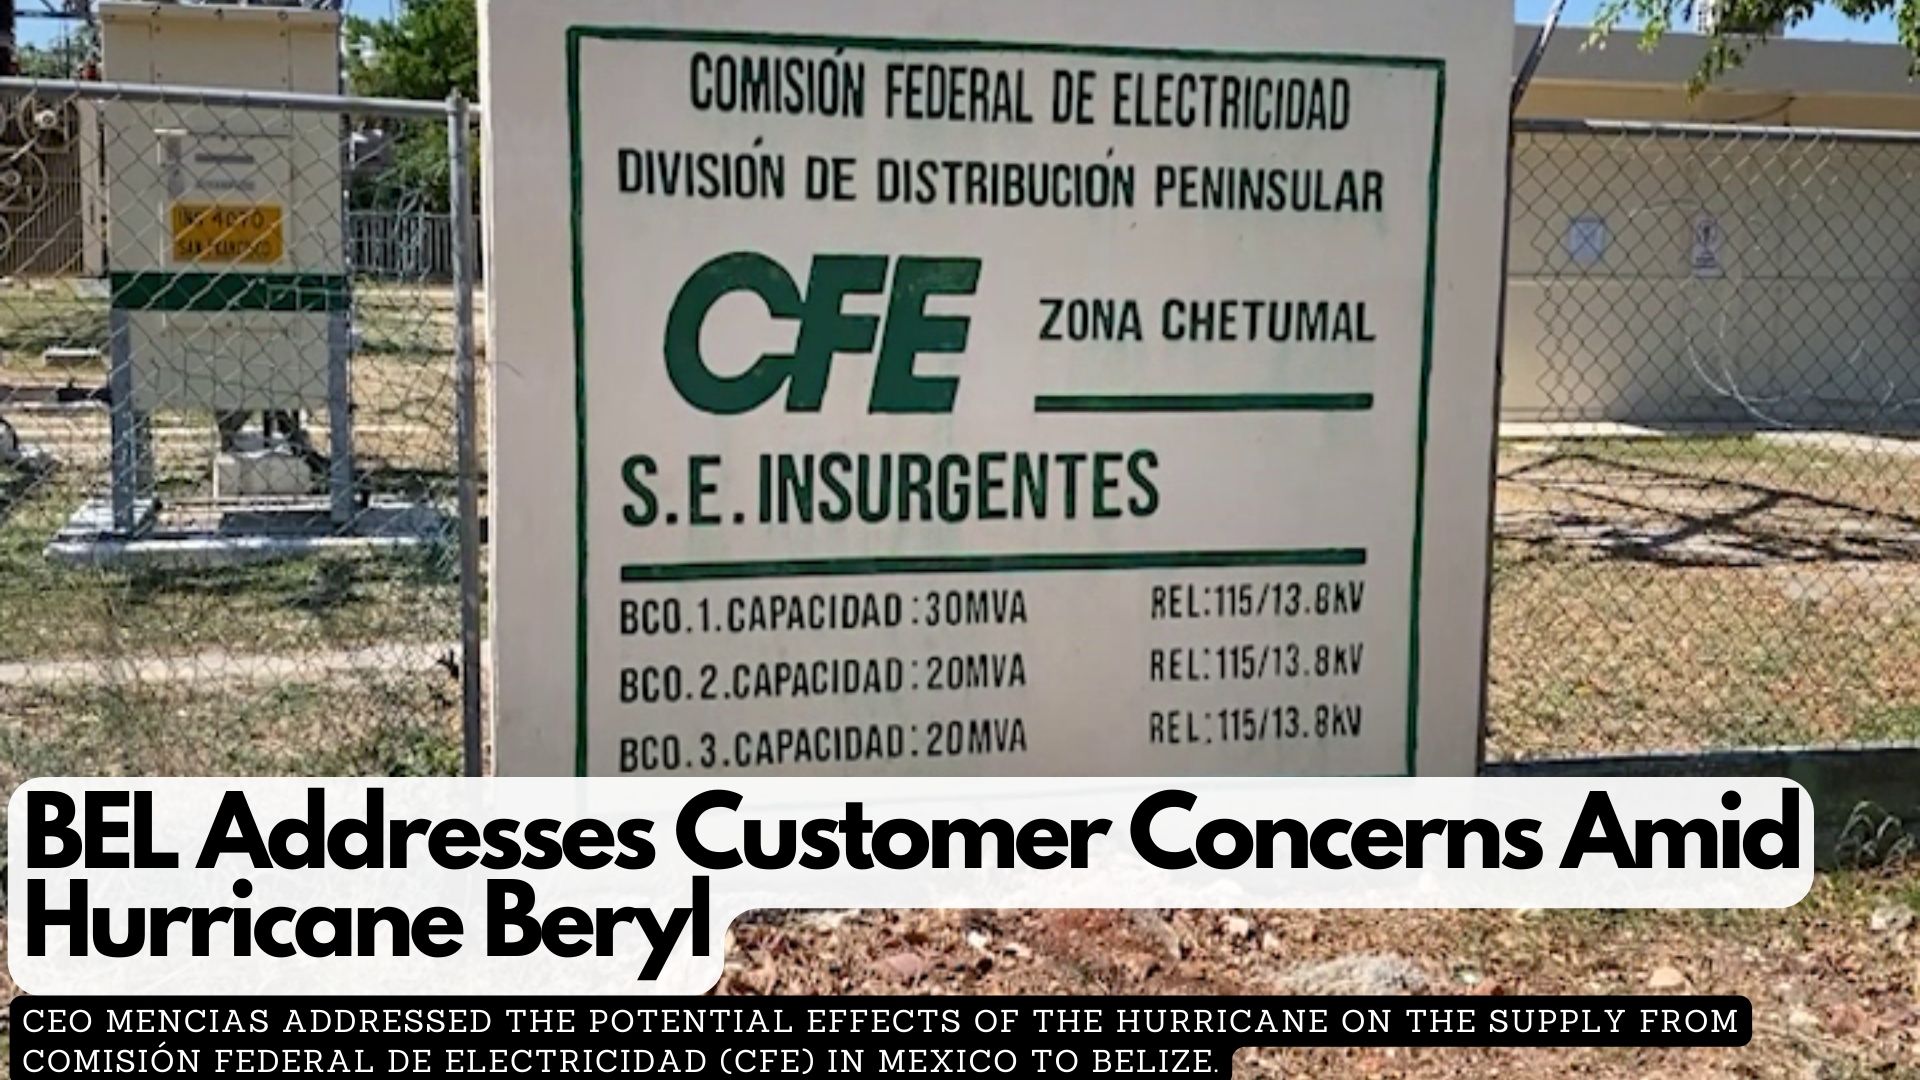 BEL Addresses Customer Concerns Amid Hurricane Beryl